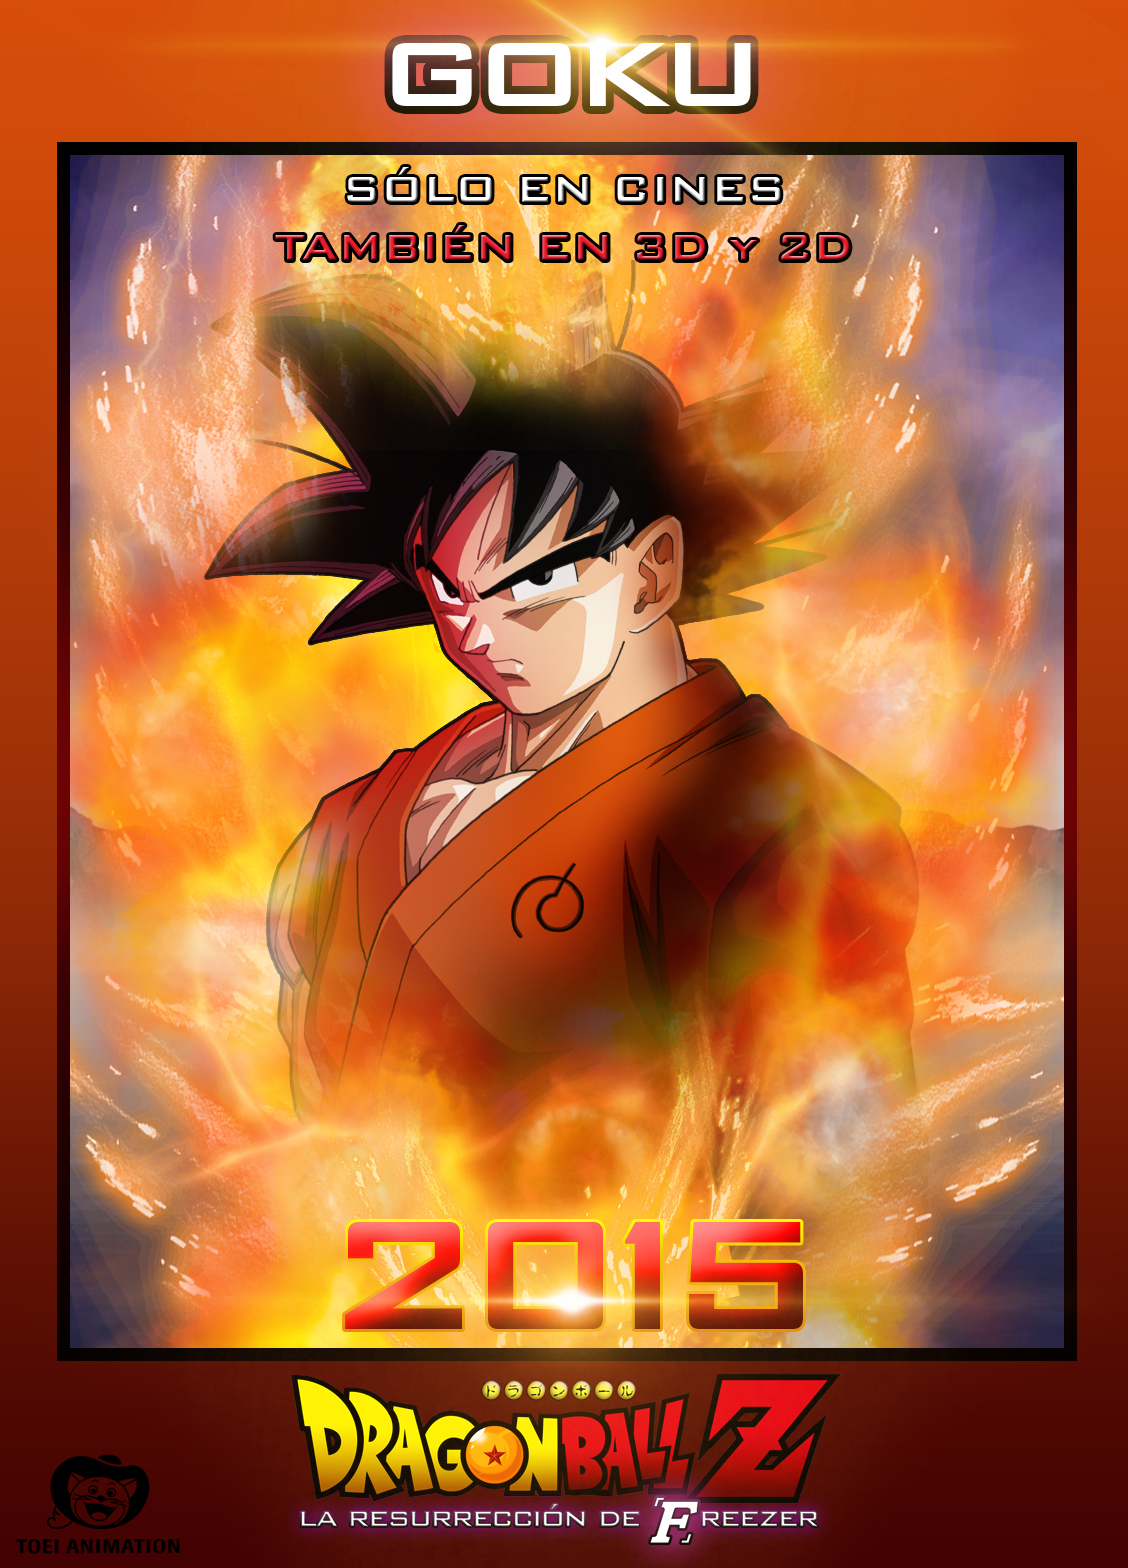 Dragon Ball Z La Resurreccion De Freezer 2015 by jorgesotozzz on DeviantArt